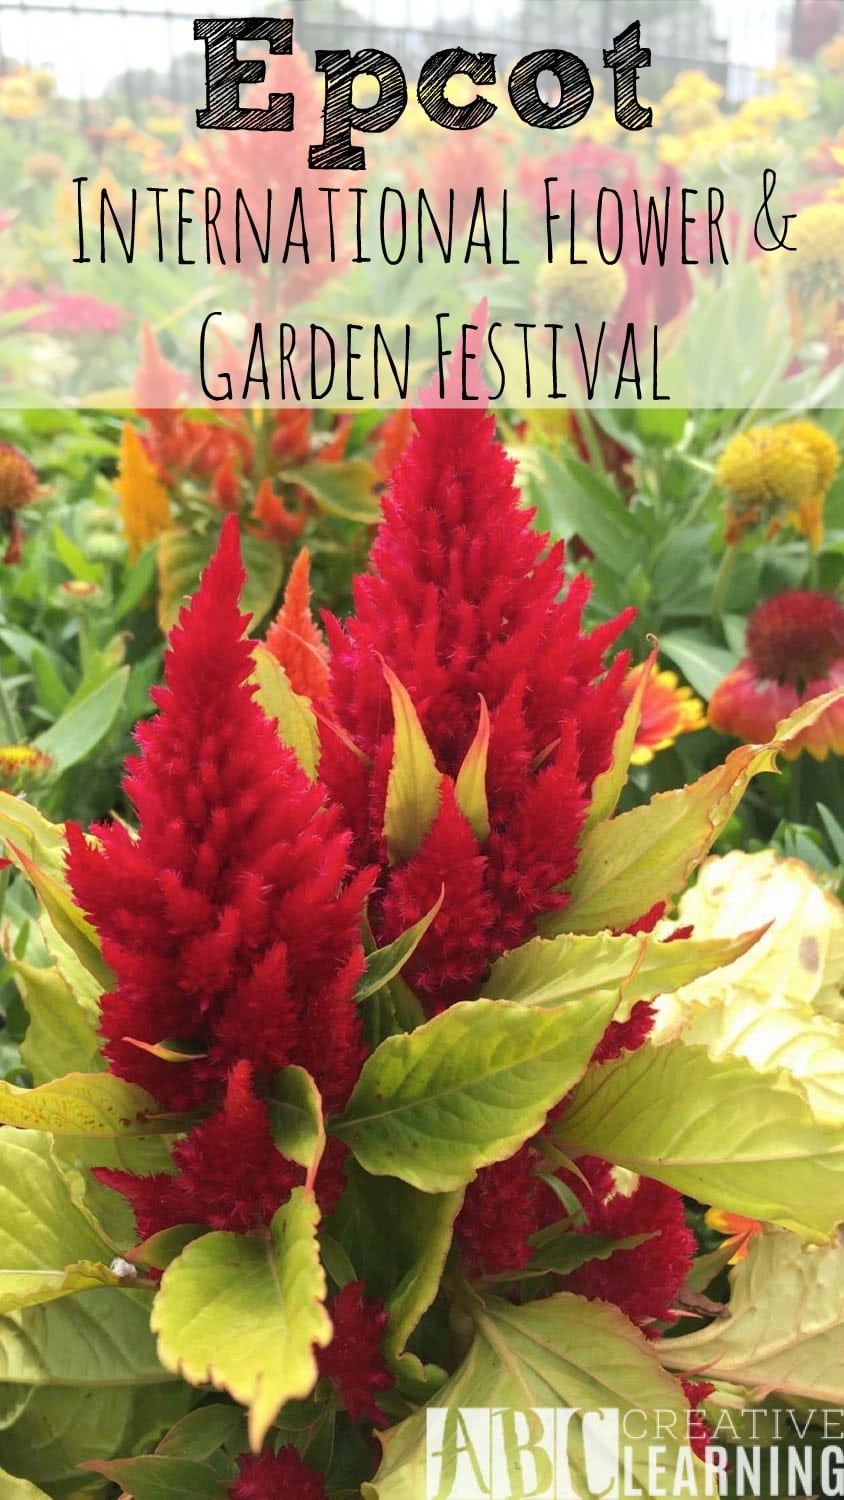 Epcot International Flower and Garden Festival 2016